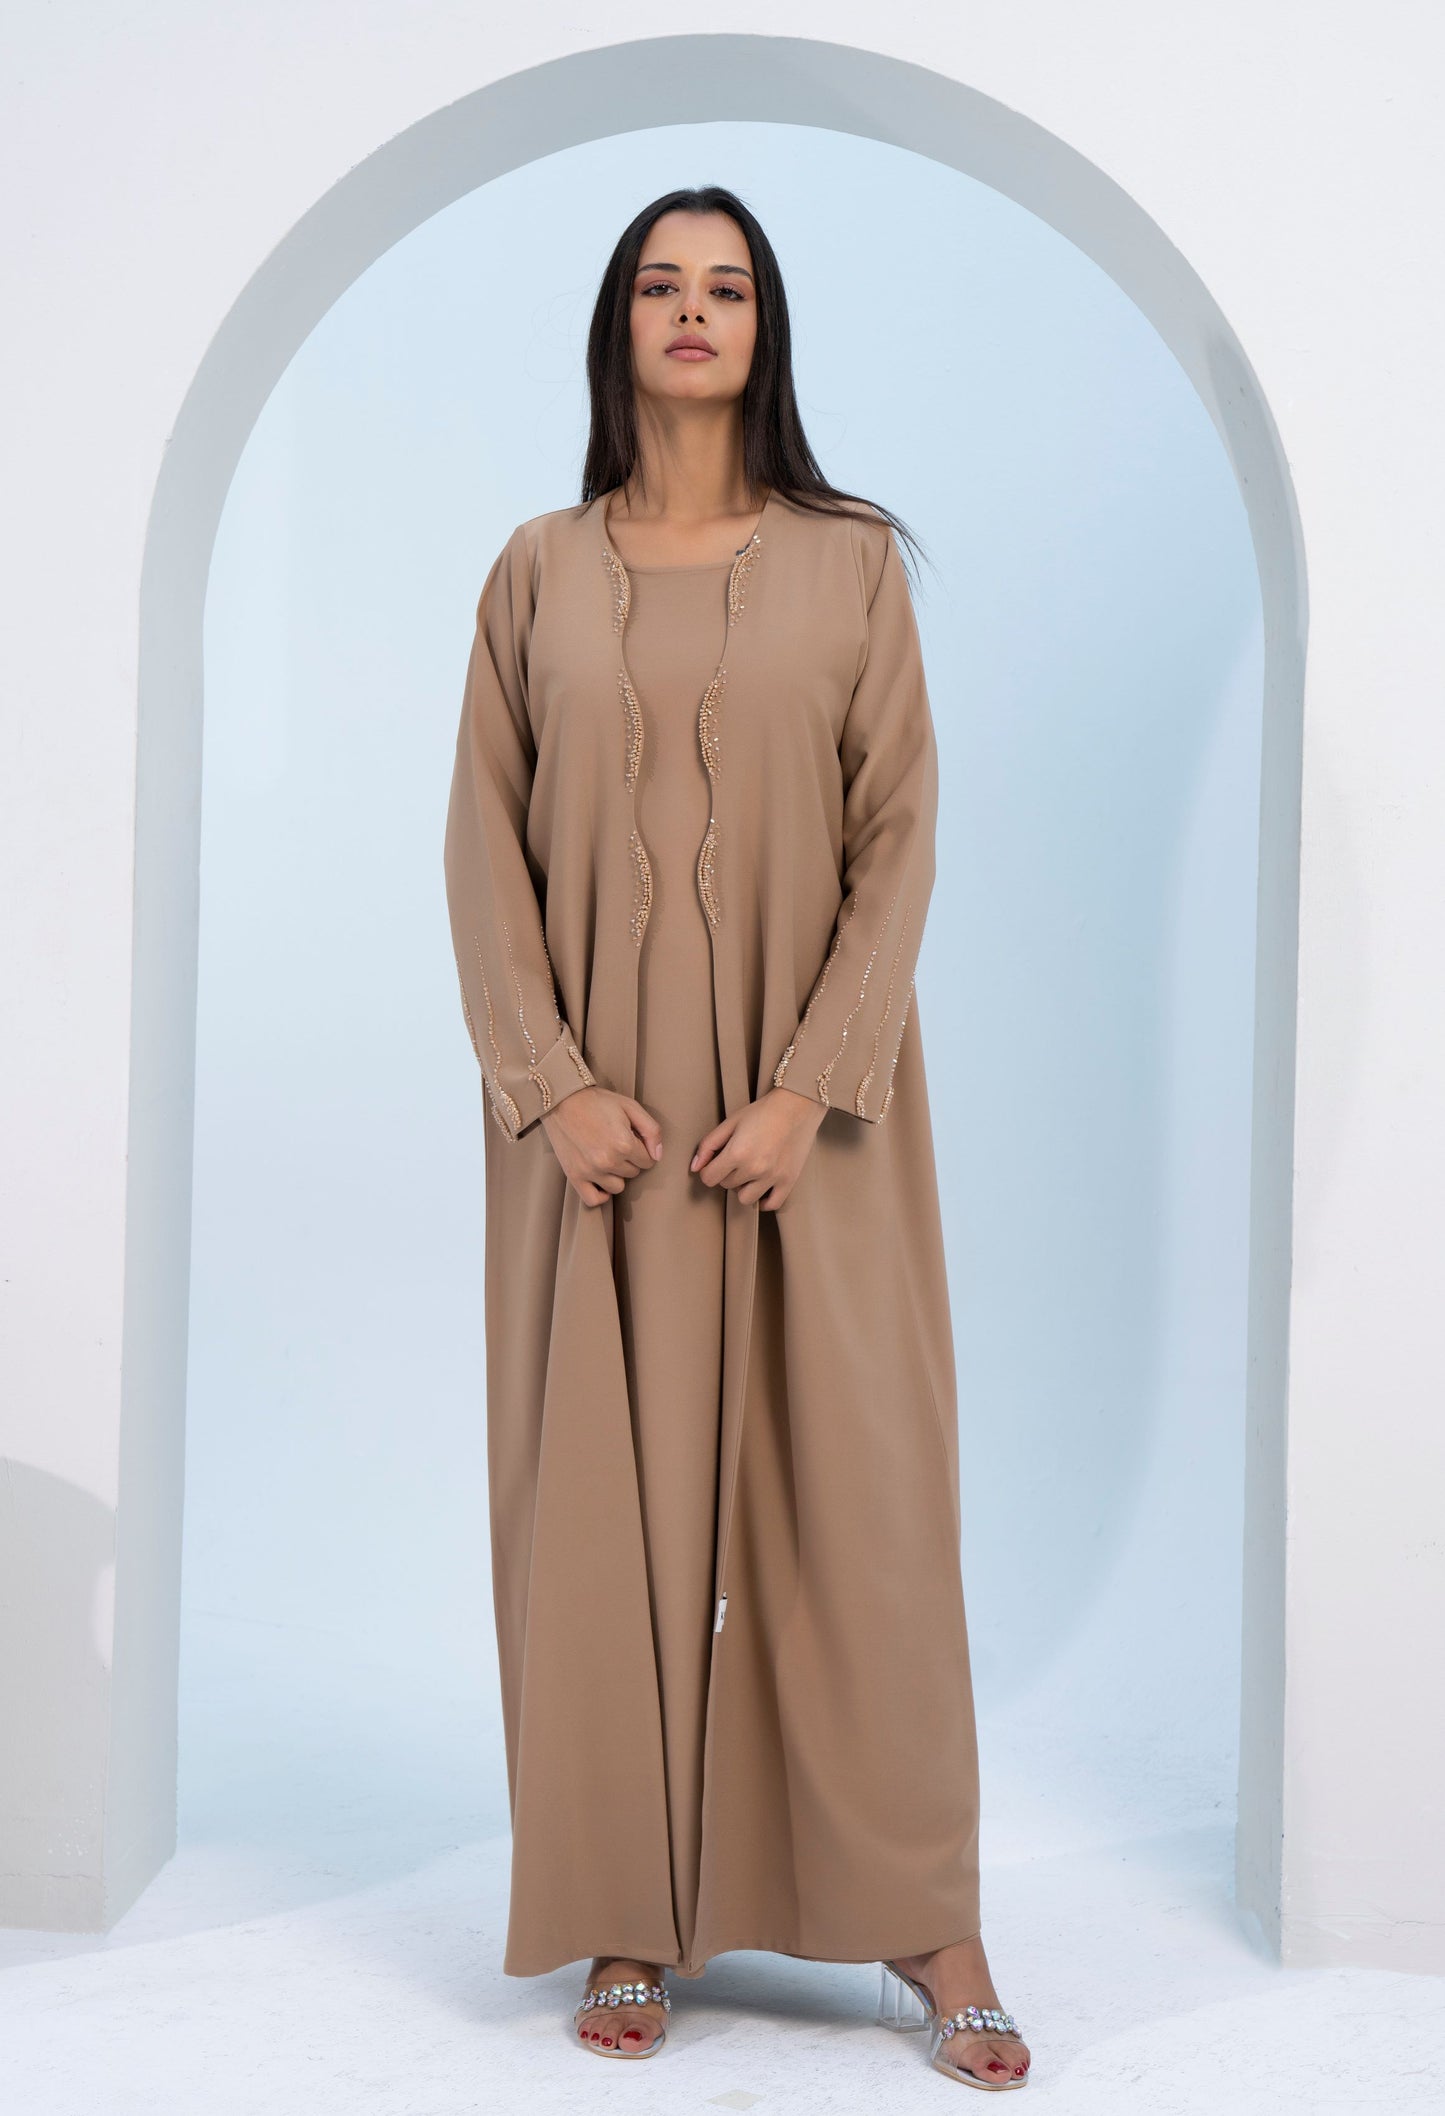 abaya designs with embellishments on sleeves